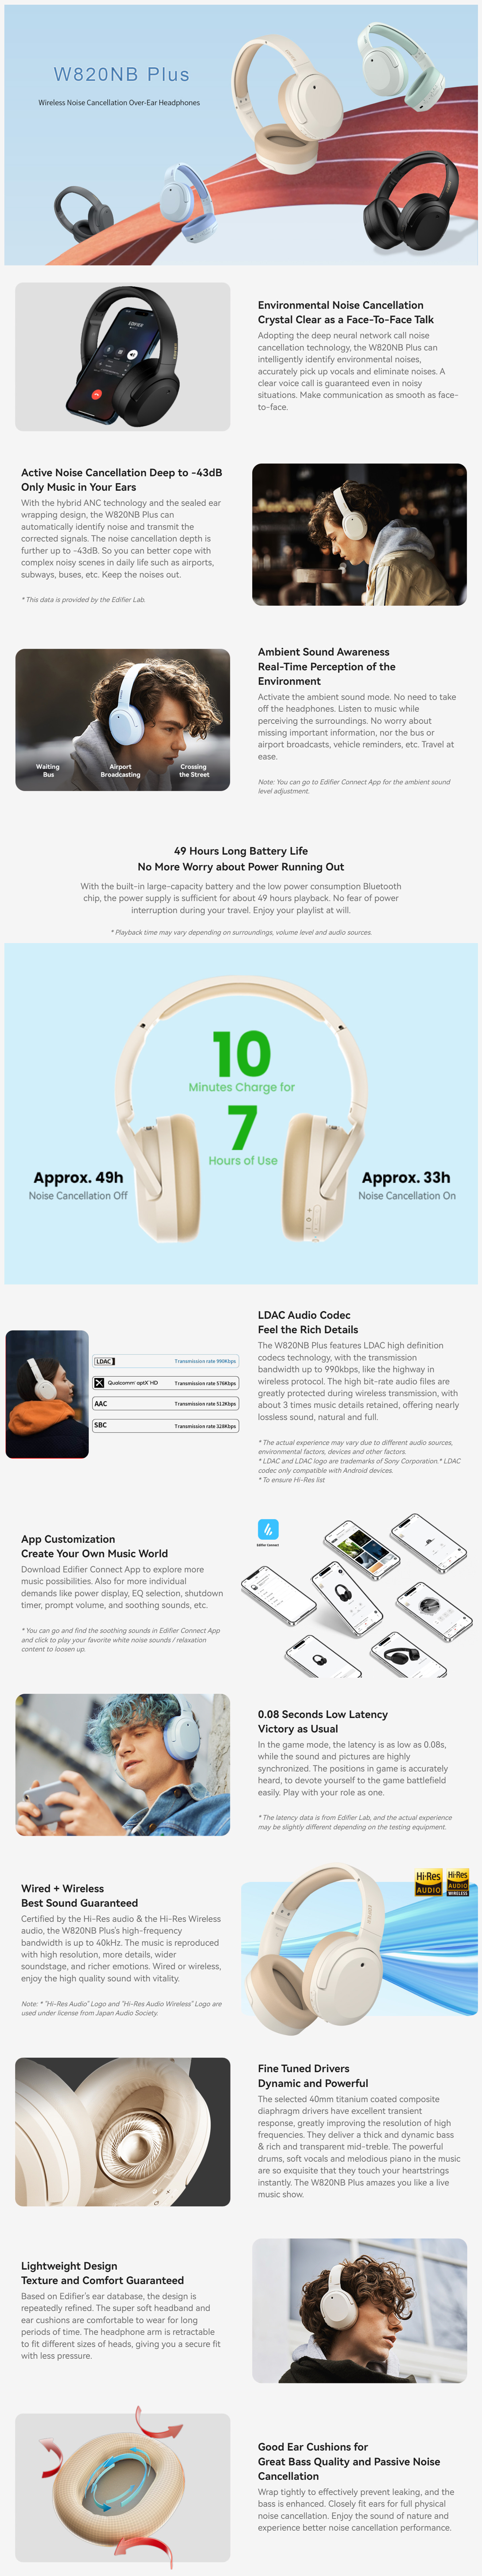 Headphones-Edifier-W820NB-Plus-Active-Noise-Cancelling-Wireless-Bluetooth-Headphone-Gray-1